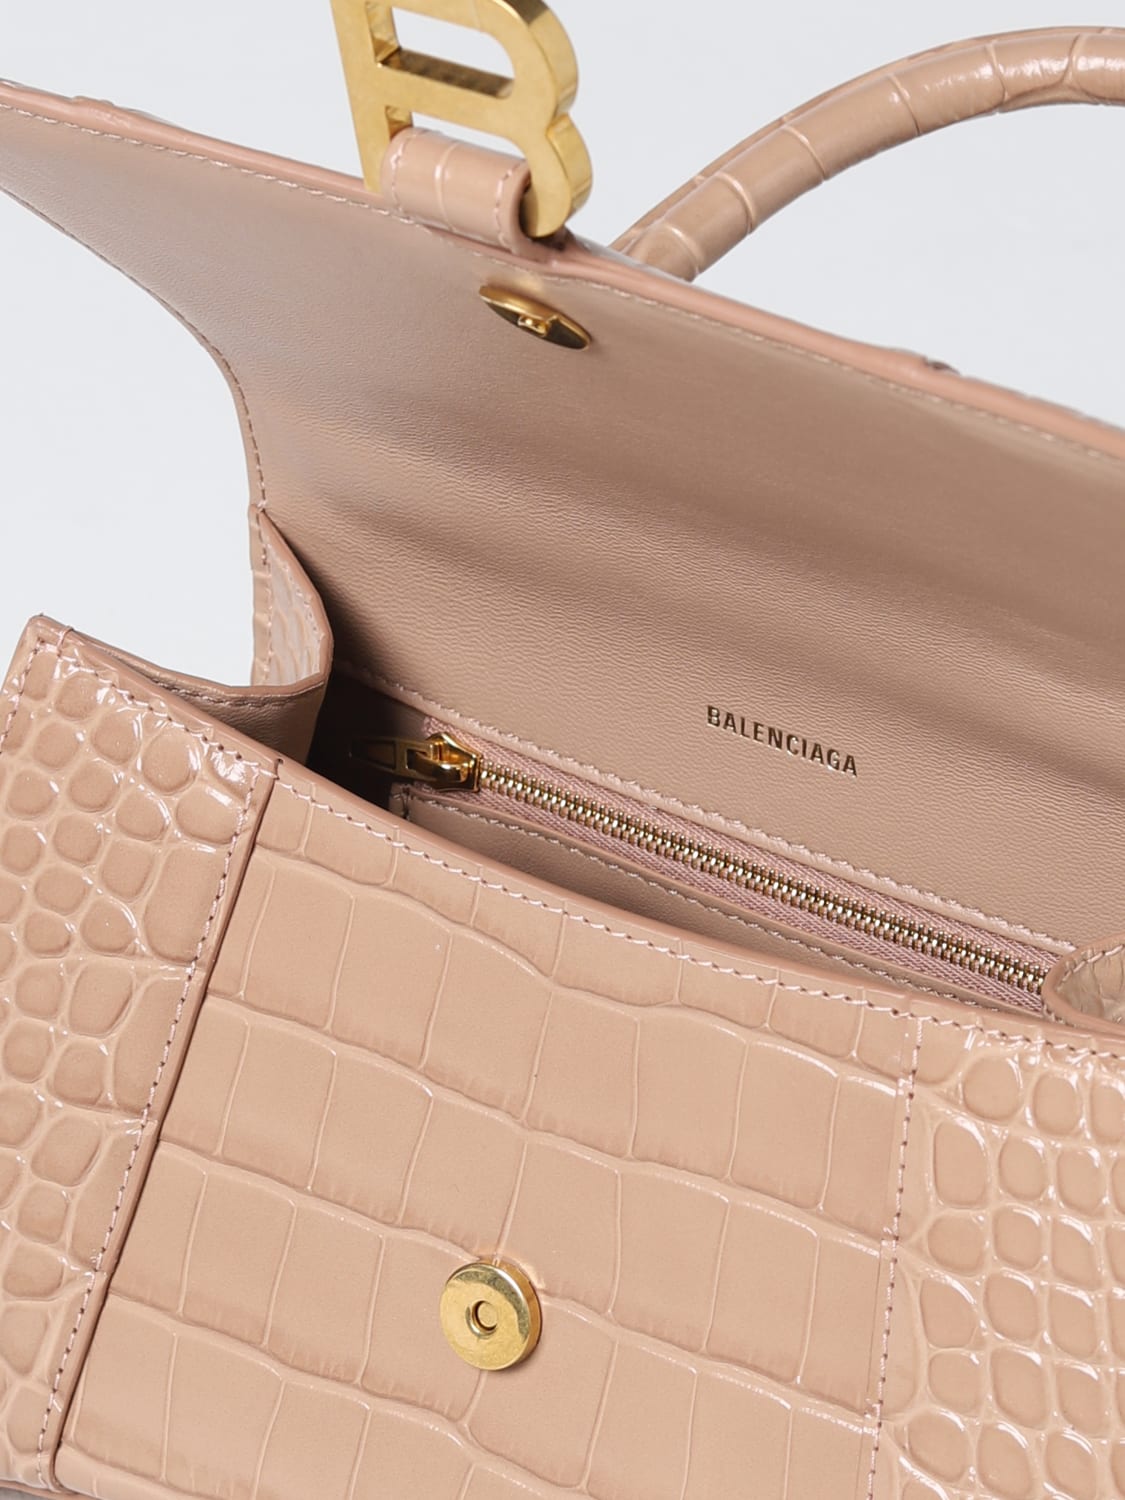 Balenciaga - Women's Small Hourglass Top-Handle Bag Top Handle Bag - Pink - Leather